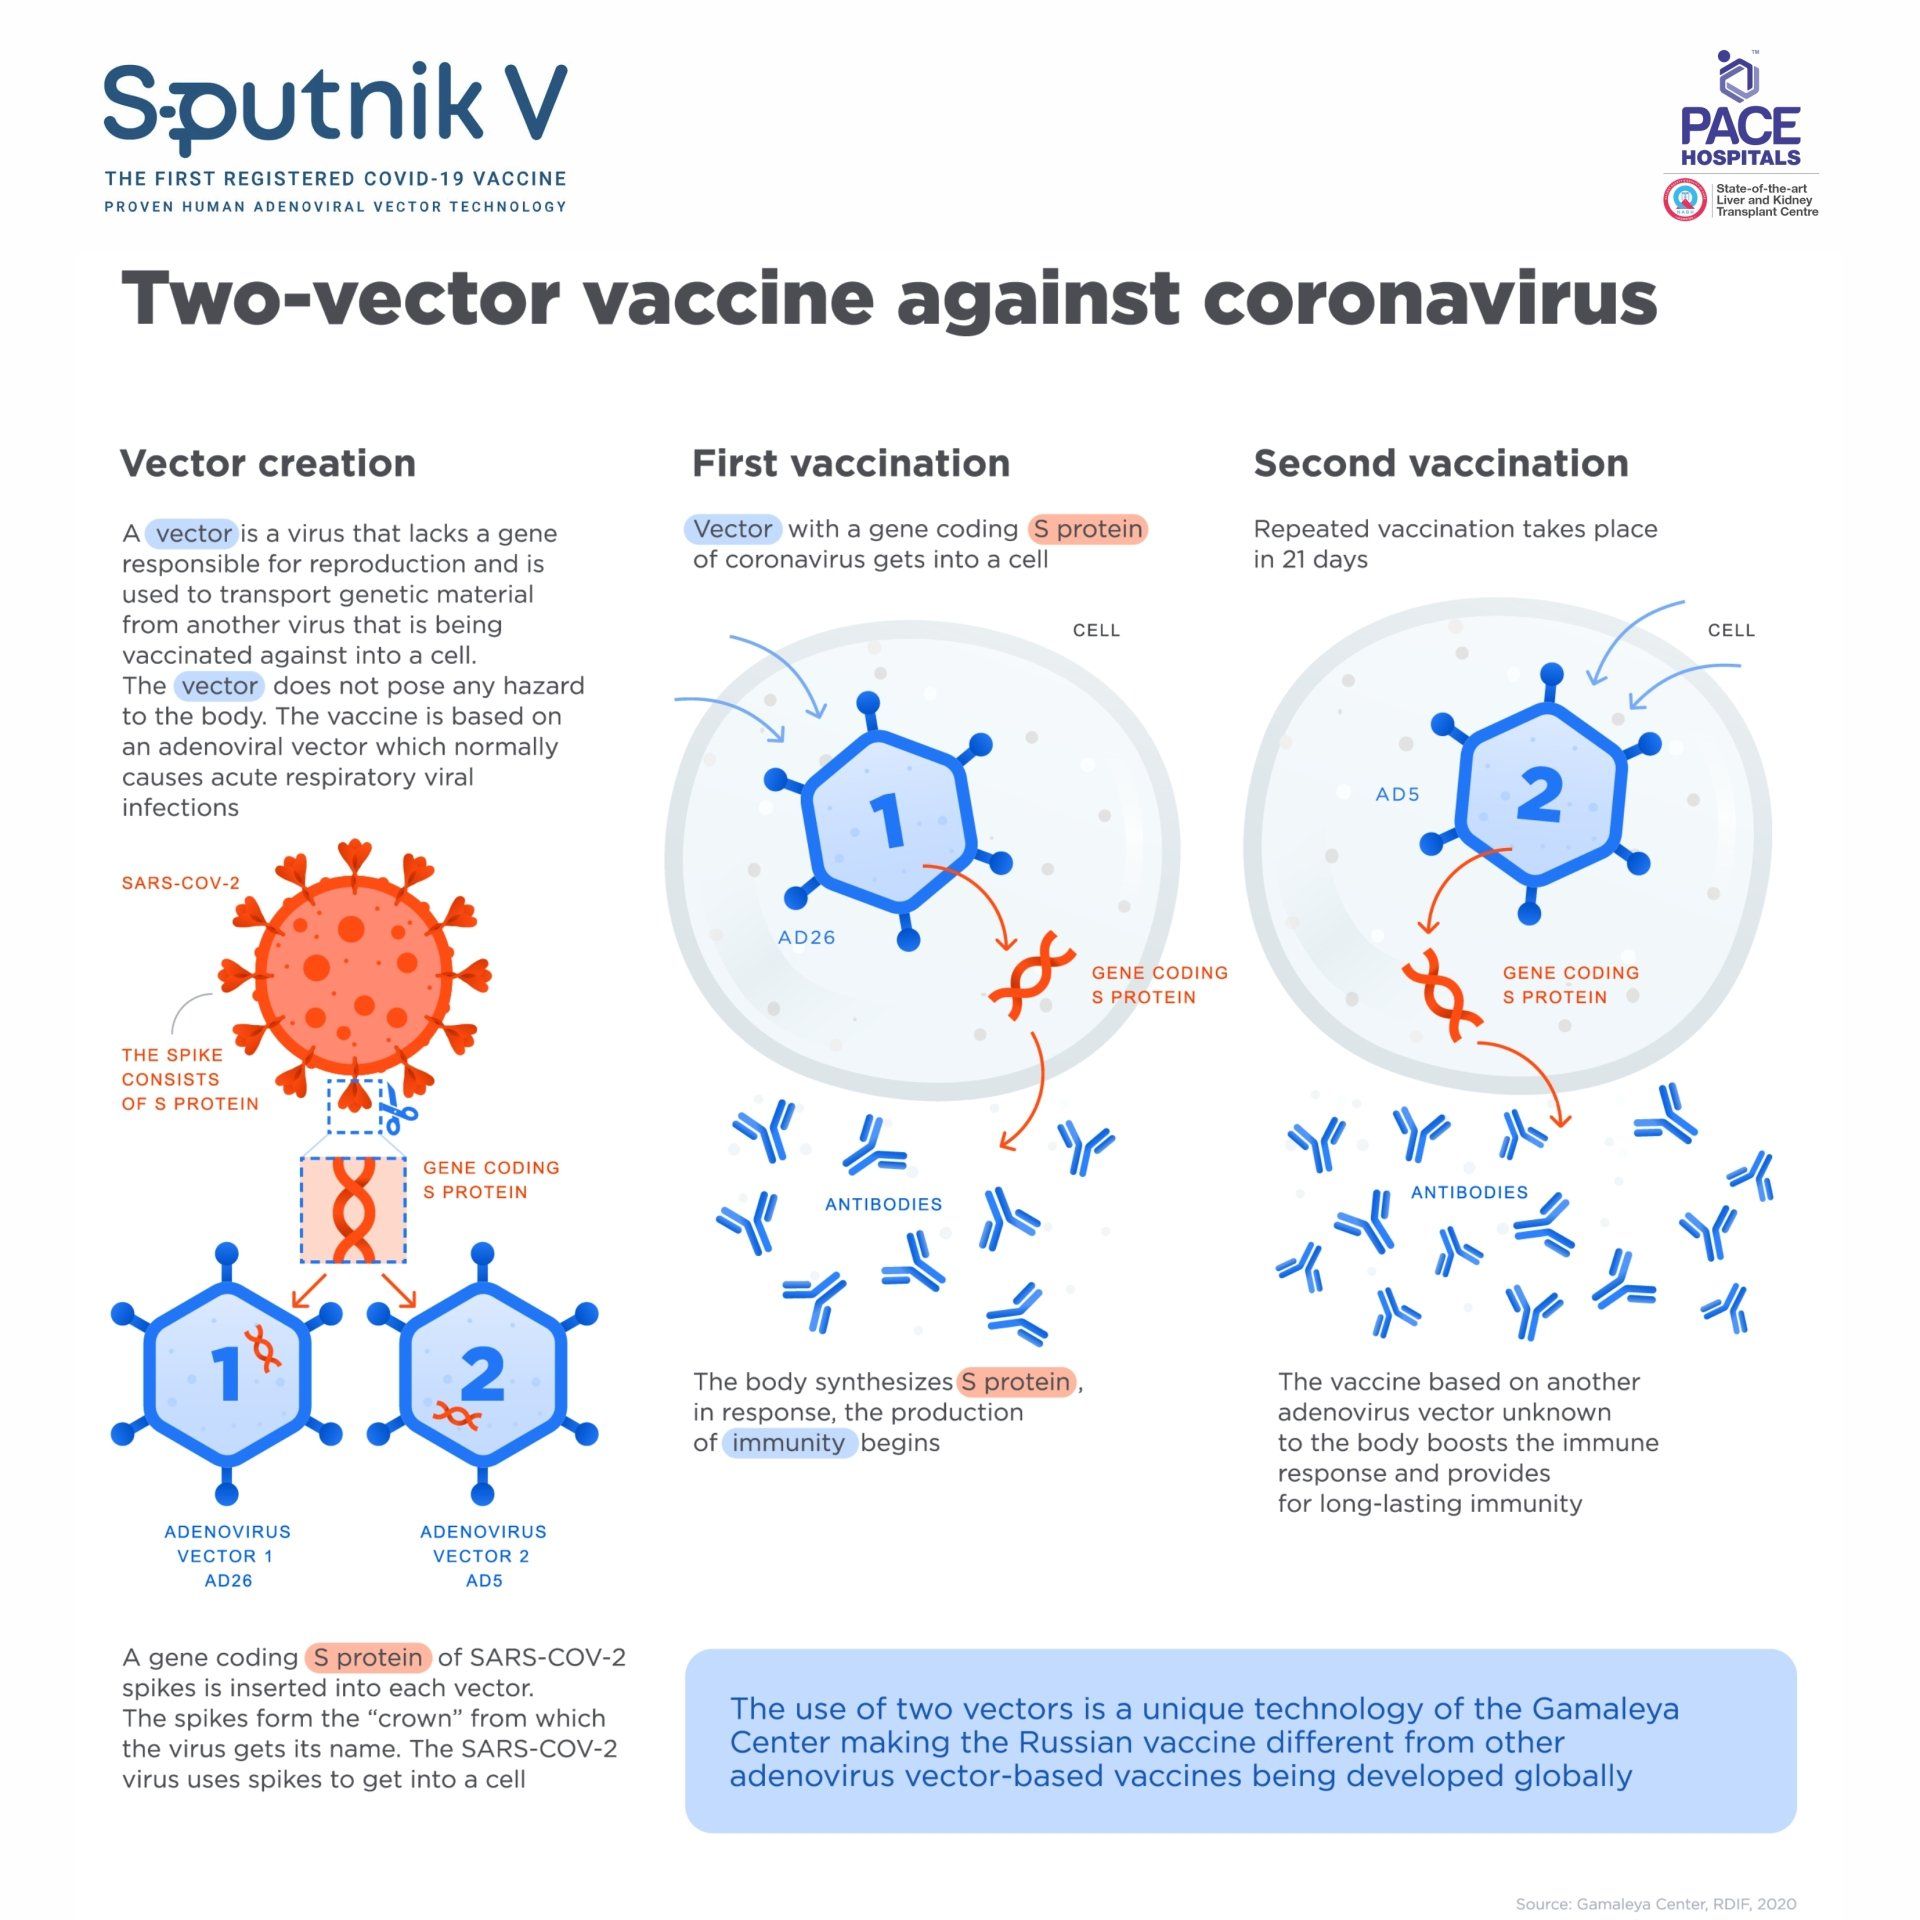 Sputnik V Vaccine based on two different human adenoviruses vector vaccine against coronavirus | Gam-COVID-Vac